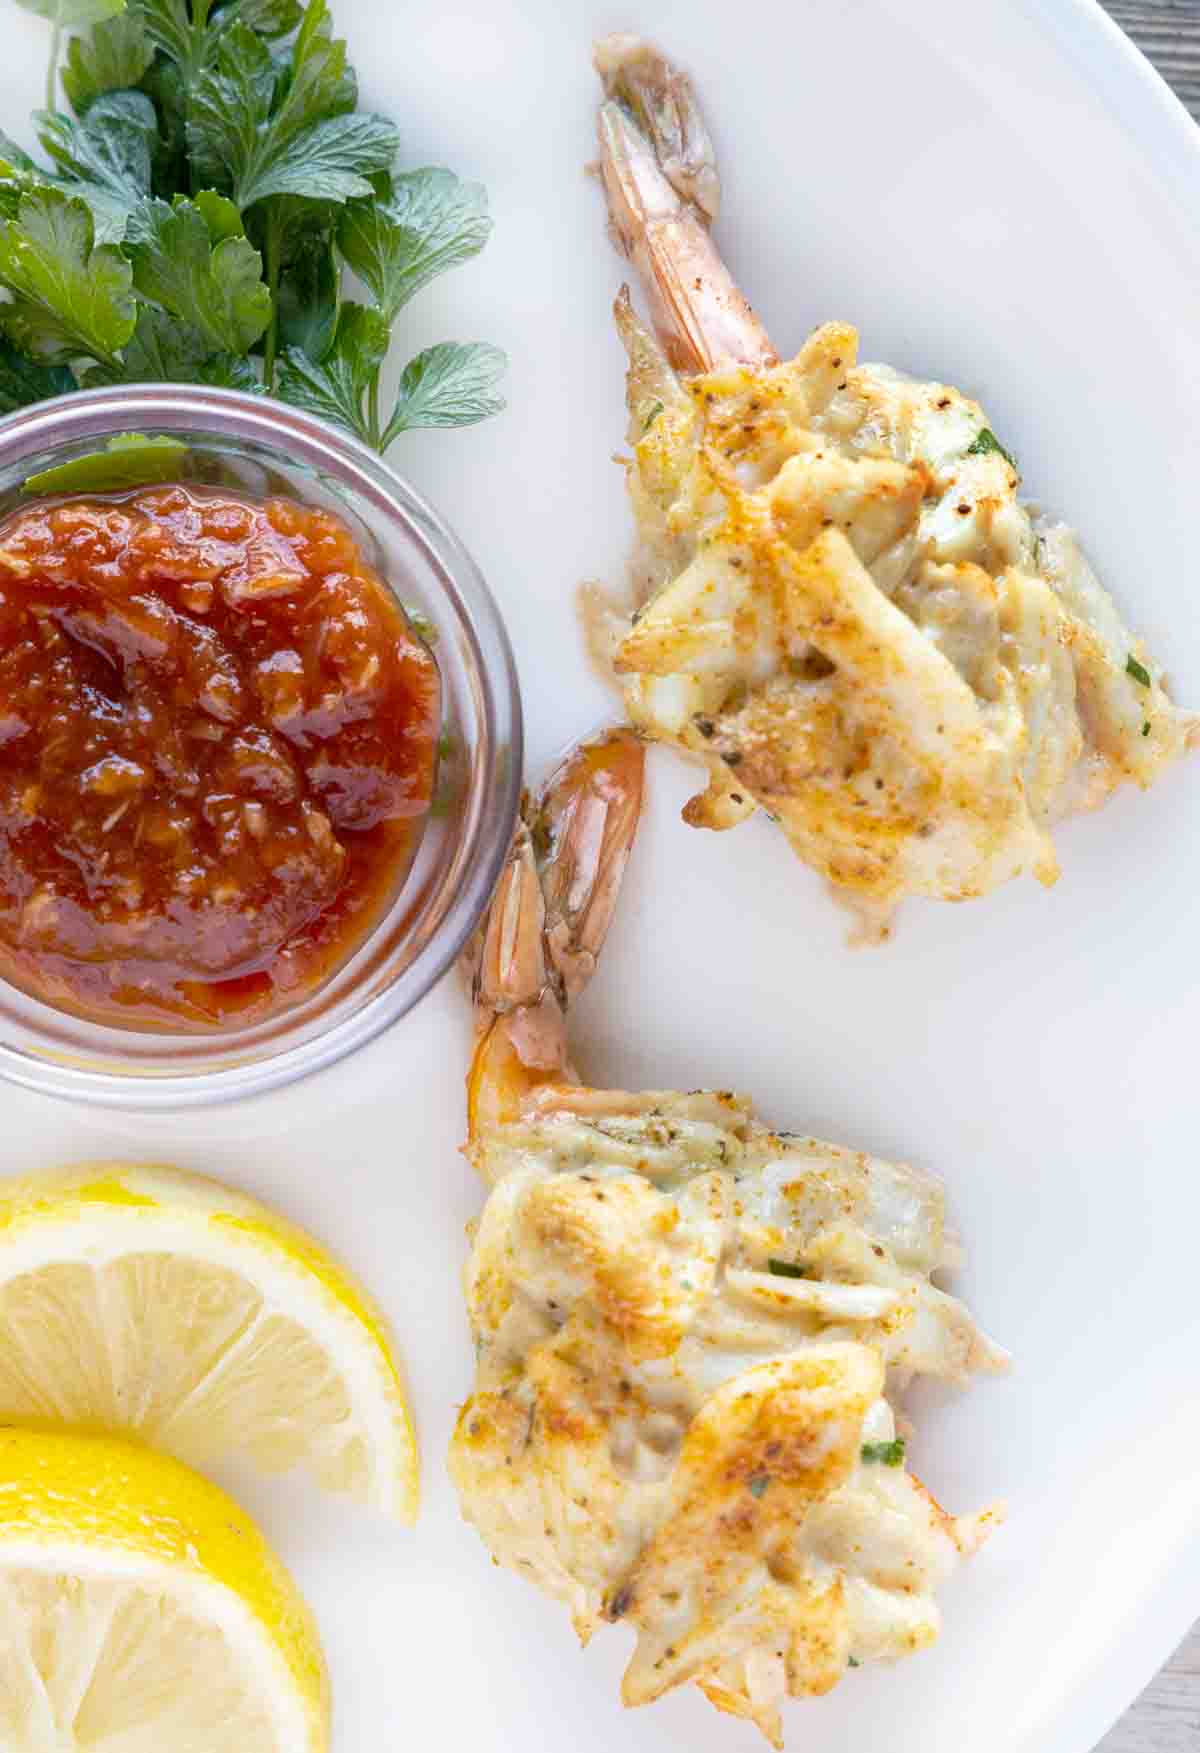 Baked Stuffed Jumbo Shrimp Recipe